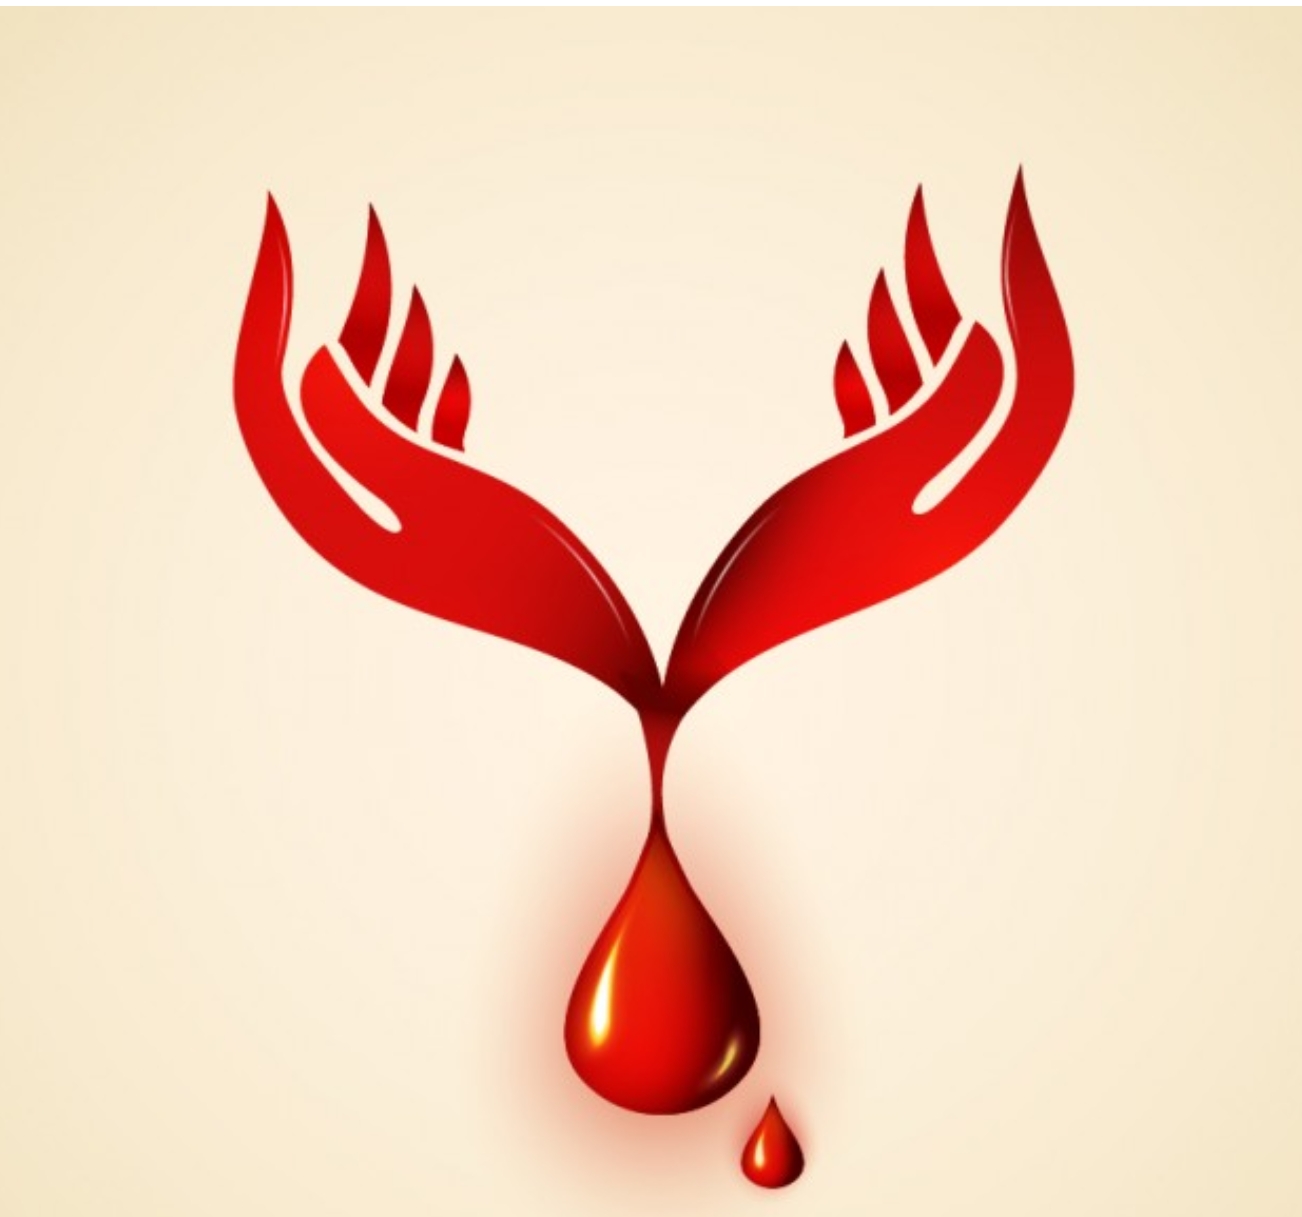 De sang. Embliyma donorstva. Капля крови логотип. Символ донорства крови. Донорство крови логотип.